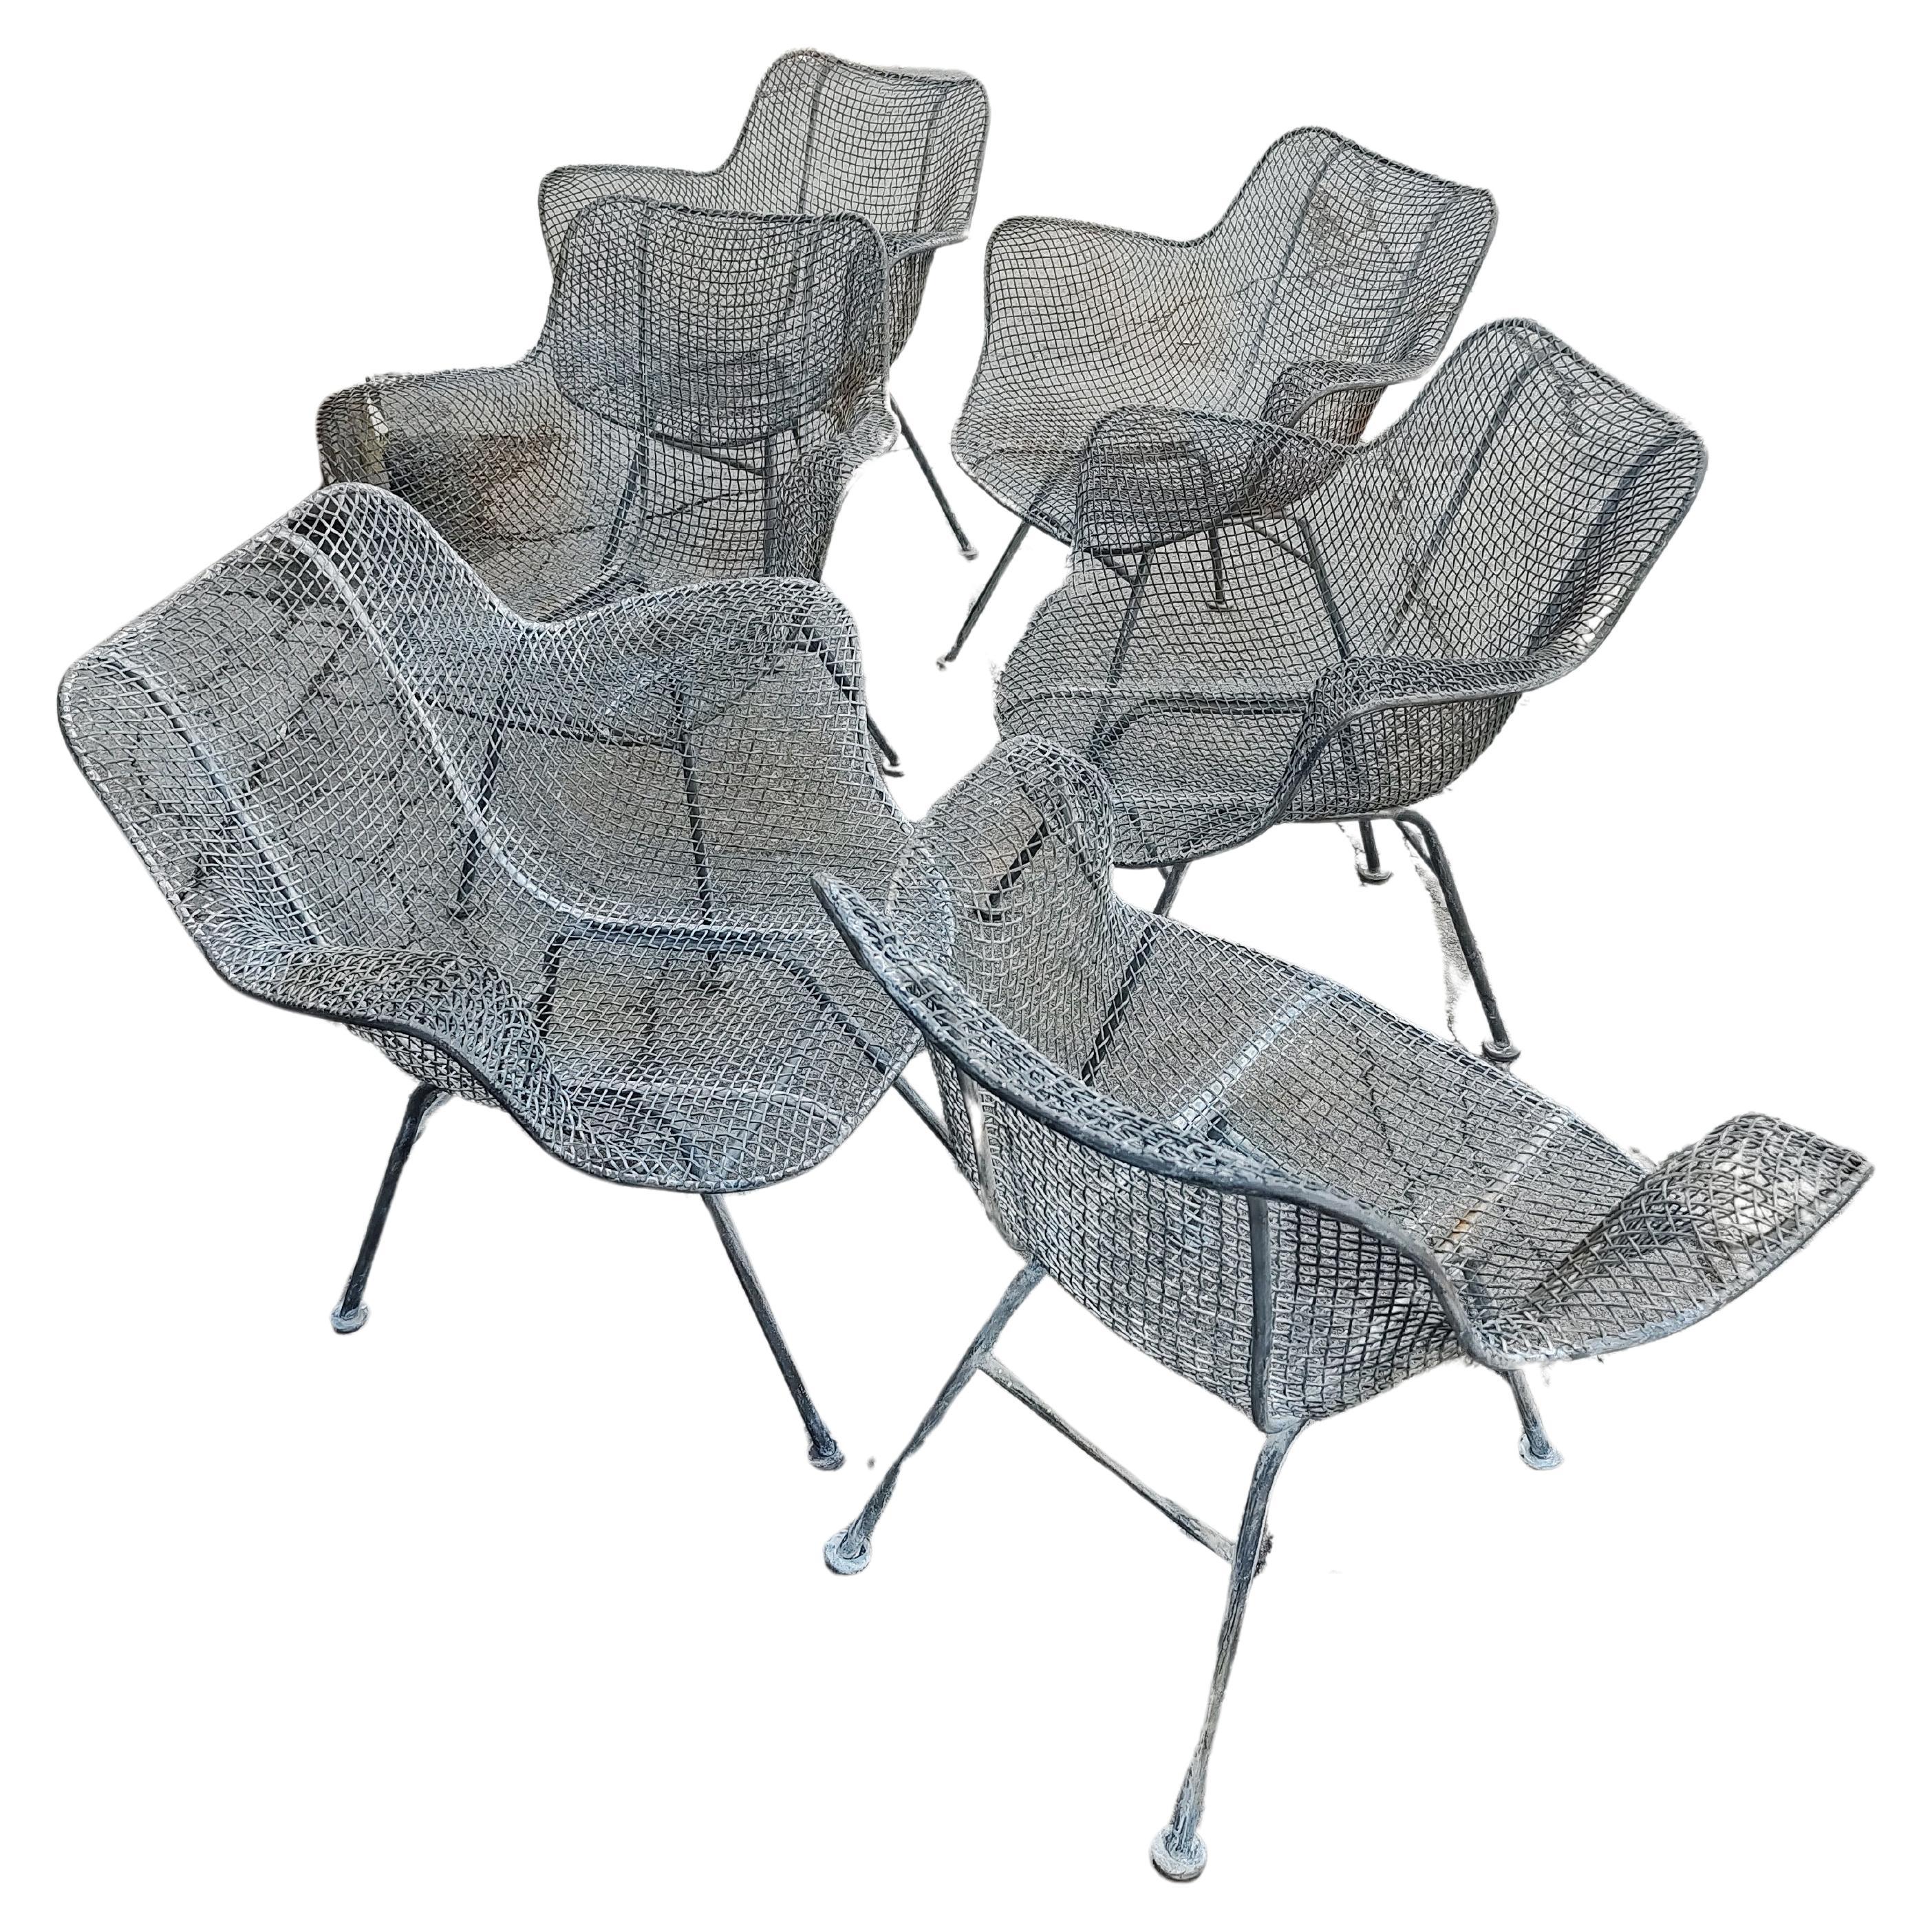 Ensemble de 6 fauteuils Sculptura modernes du milieu du siècle dernier par Russell Woodard, vers 1955